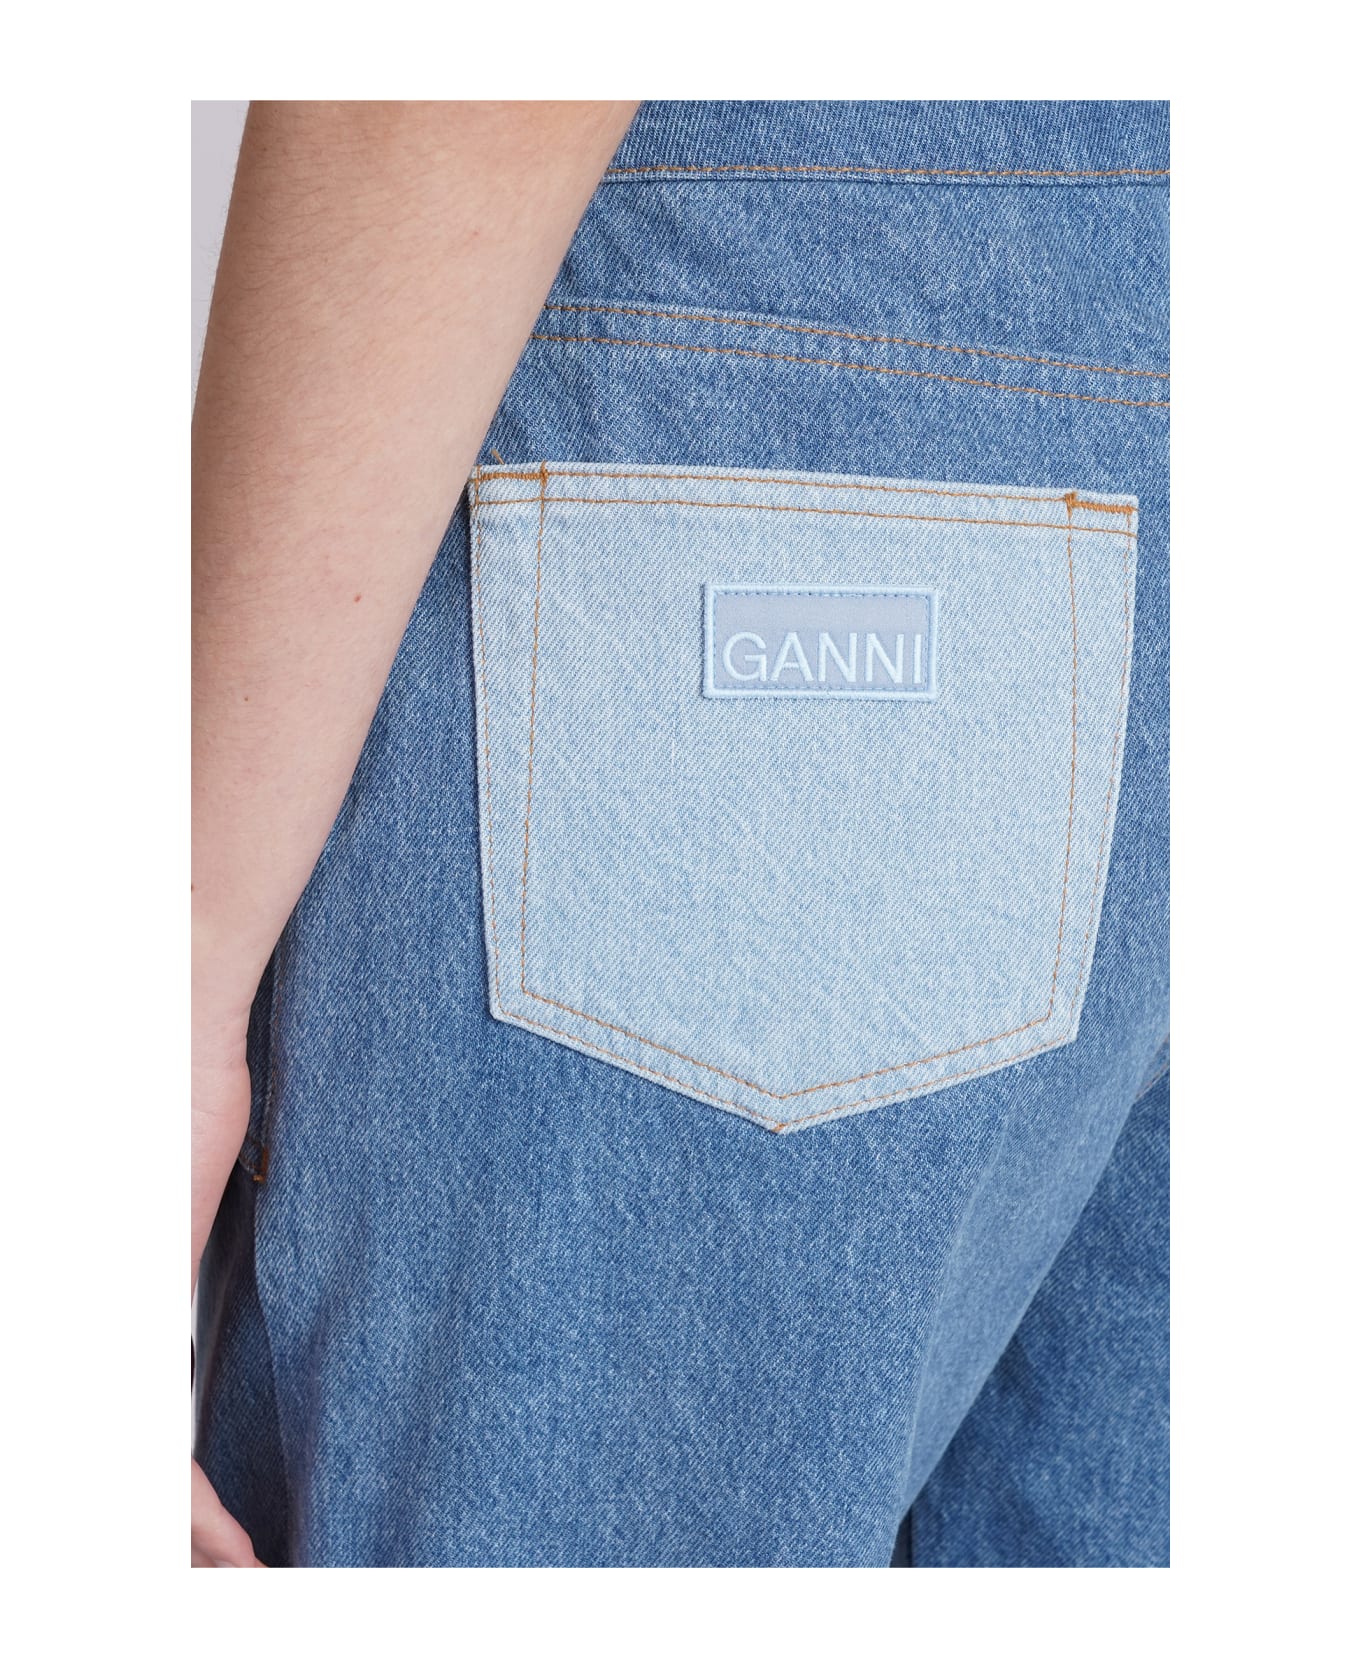 Ganni Jeans In Blue Cotton - MID BLUE VINTAGE